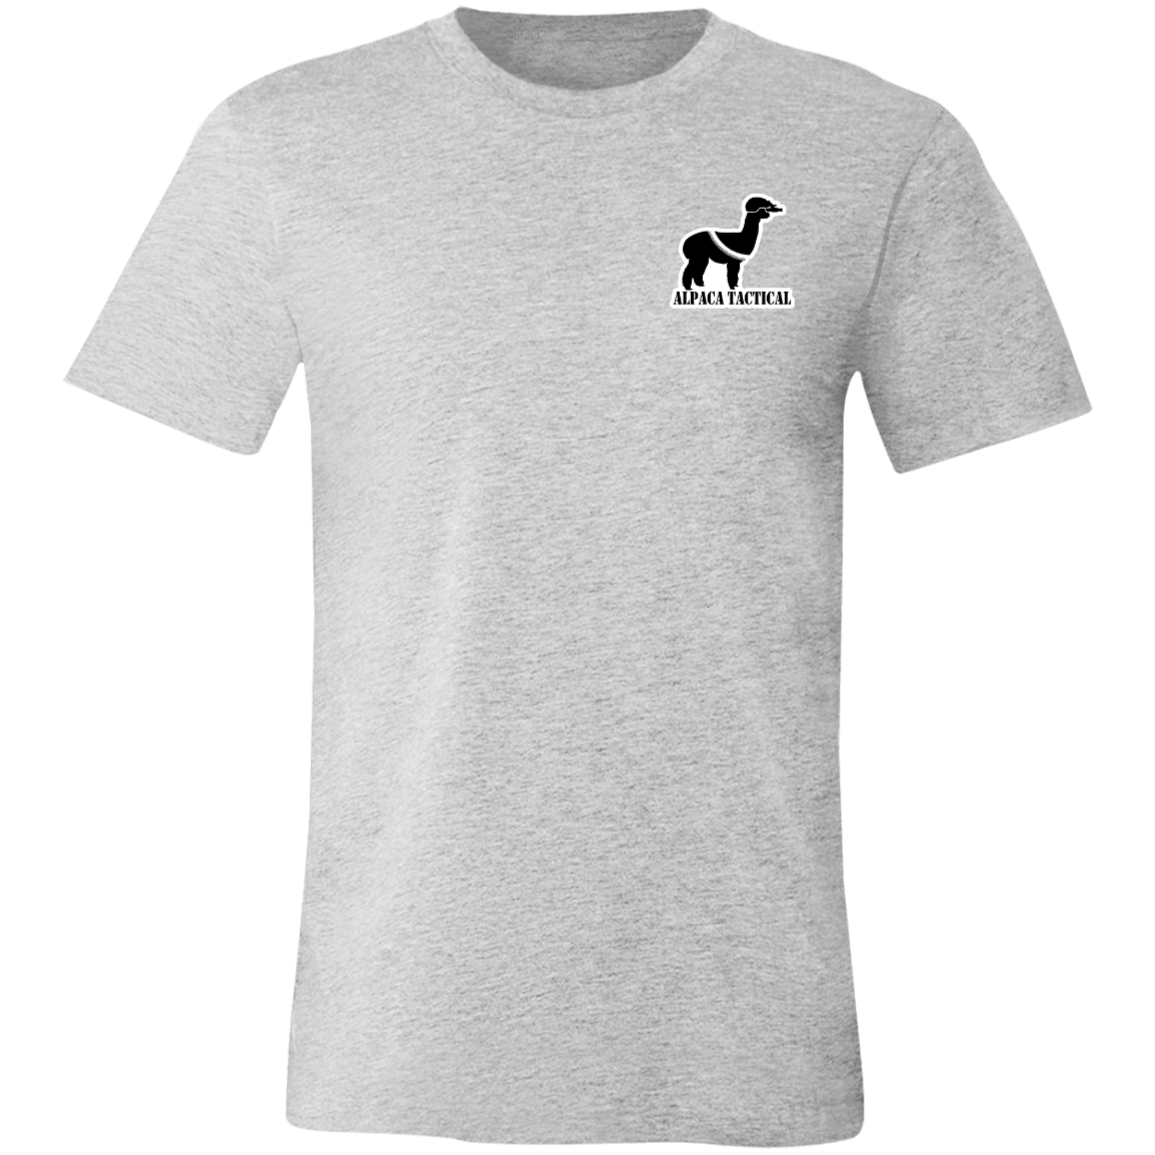 Sierra Leone Shooting Team Unisex Jersey Short-Sleeve T-Shirt